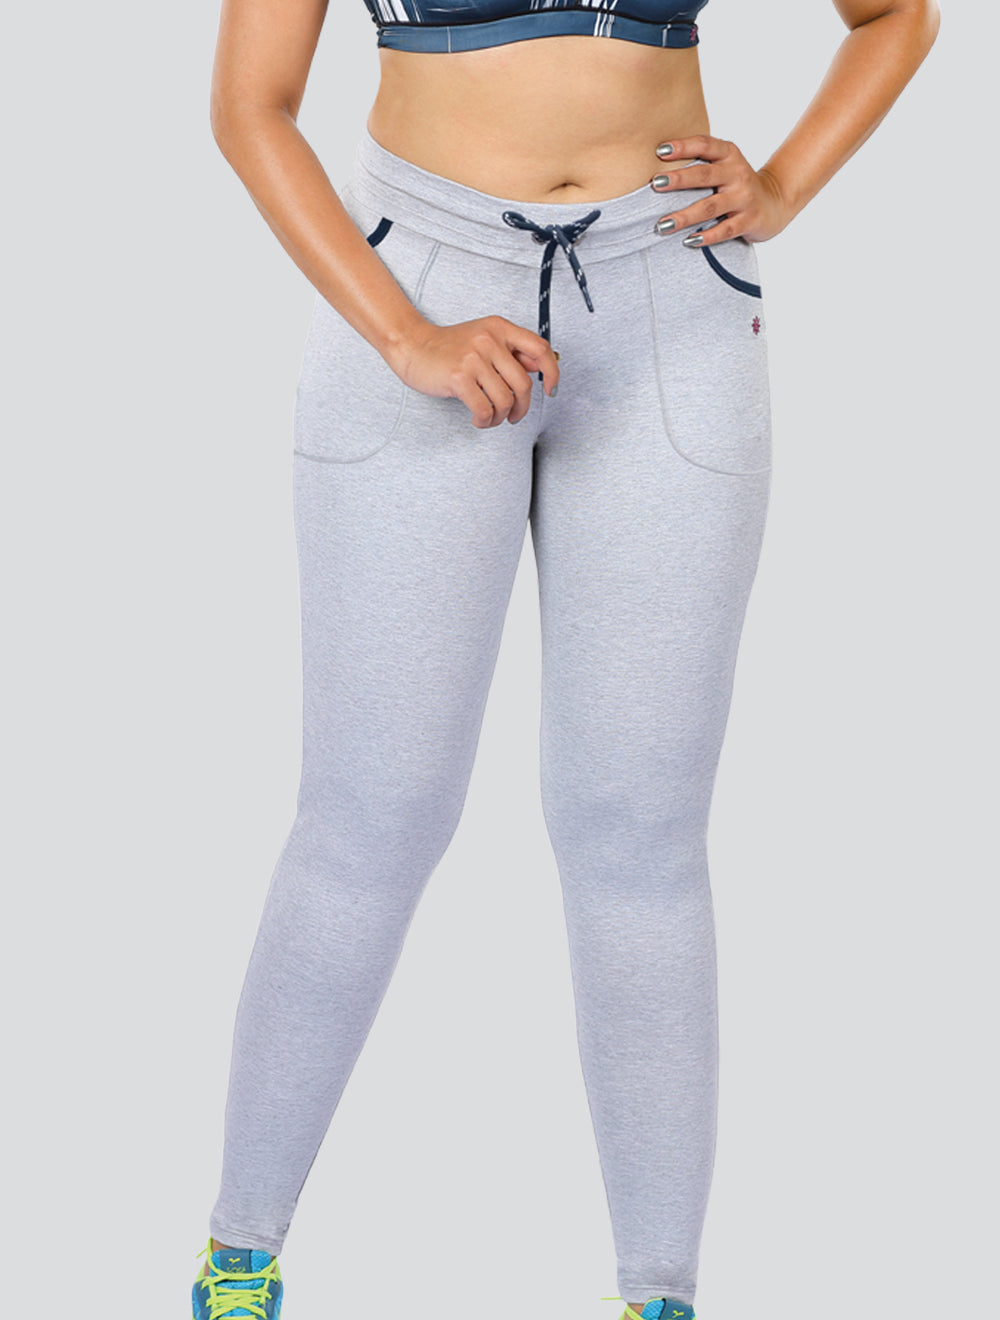 Women Sexy Push Up Fitness Leggings Pocket Sport Yoga Gym Pants Workout  Trousers | eBay